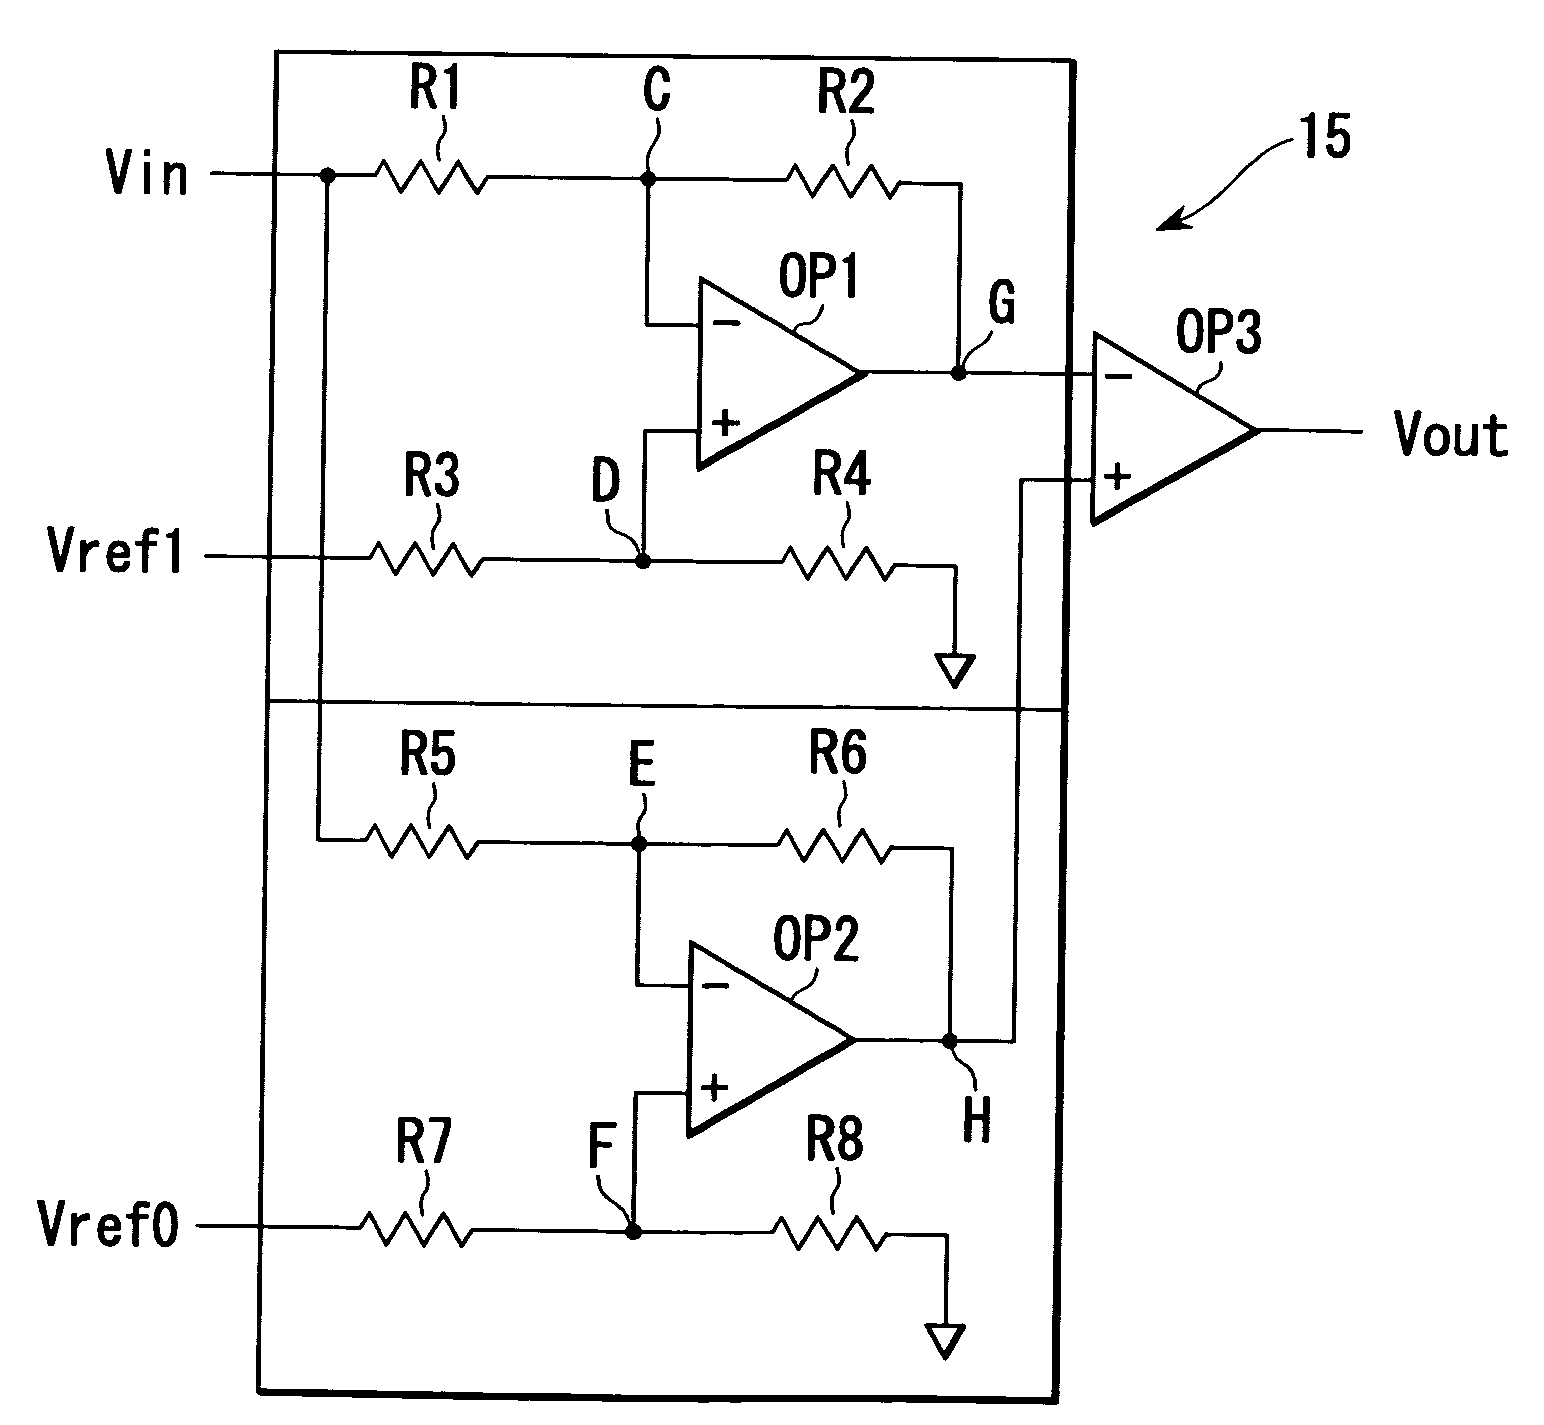 Semiconductor apparatus having logic level decision circuit and inter-semiconductor apparatus signal transmission system